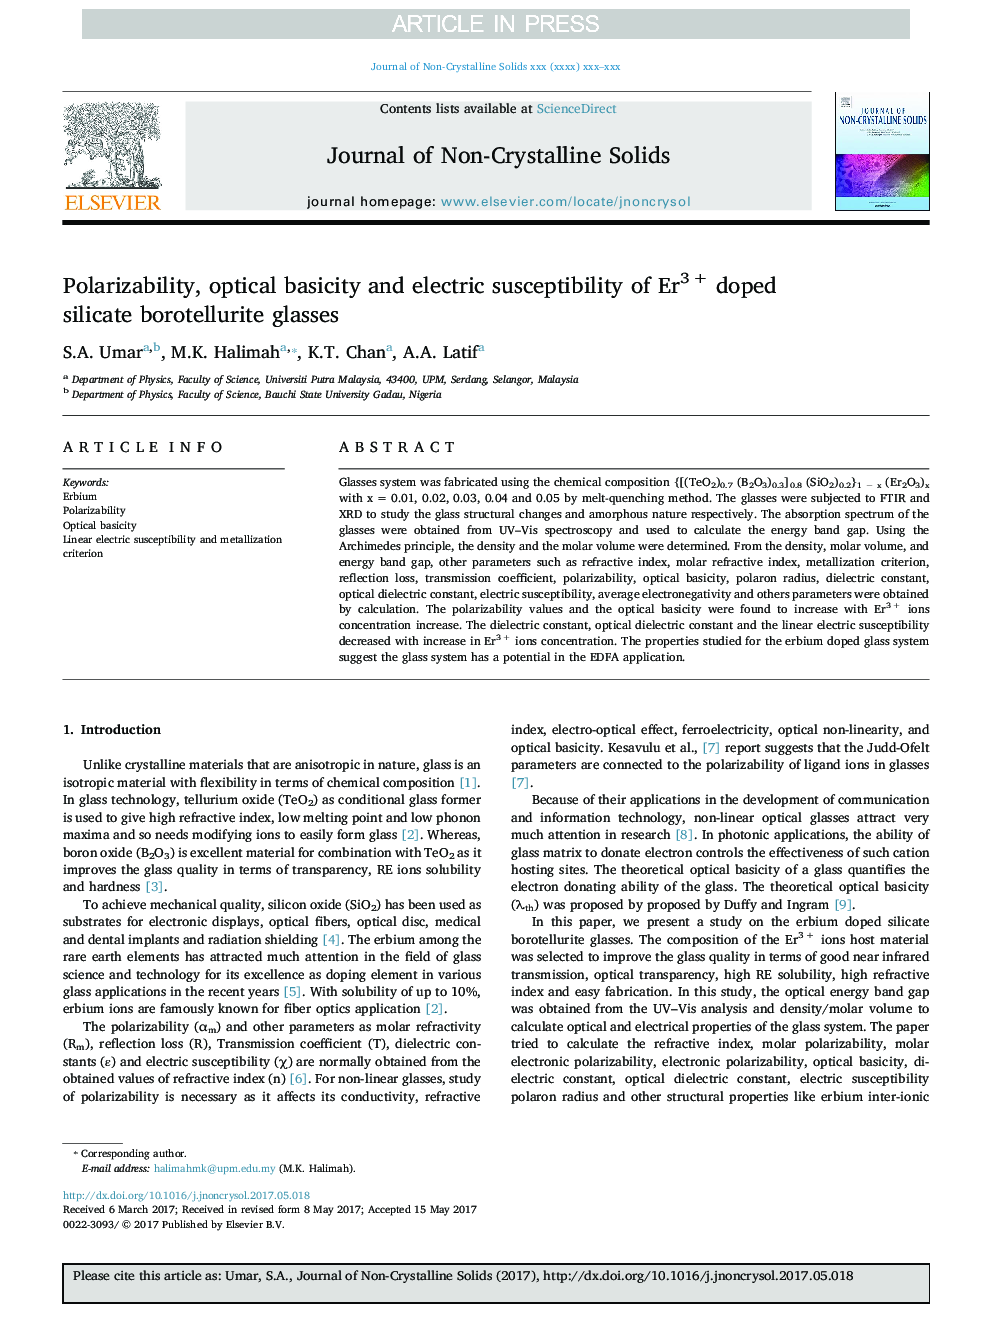 Polarizability, optical basicity and electric susceptibility of Er3Â + doped silicate borotellurite glasses